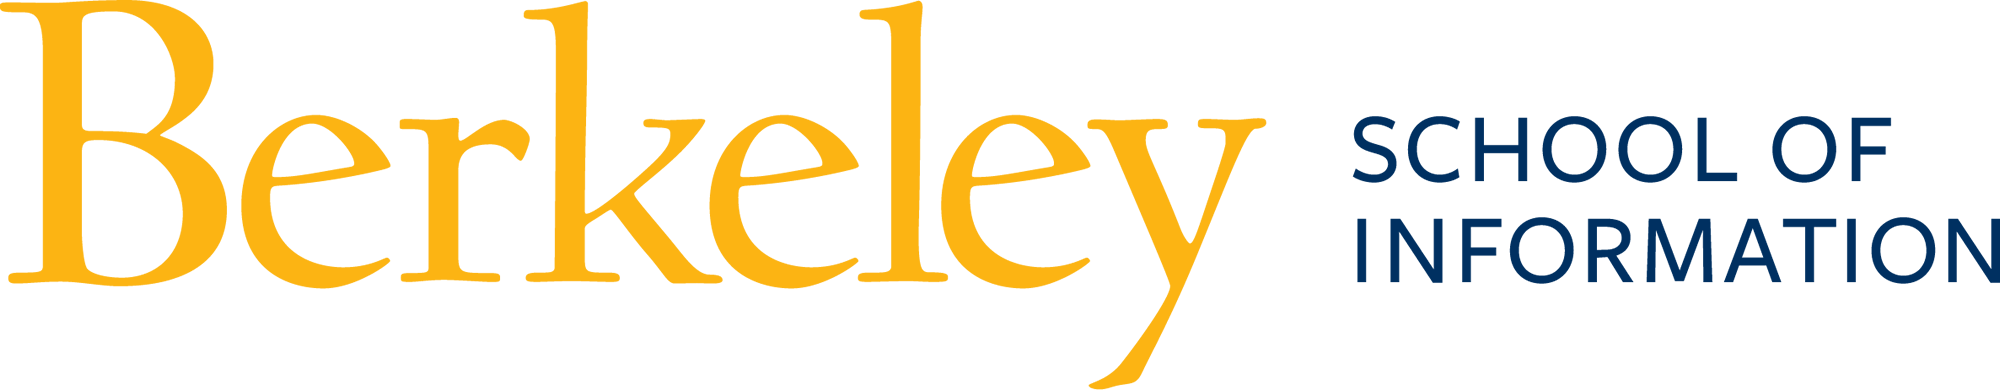 University Of Berkeley Logos